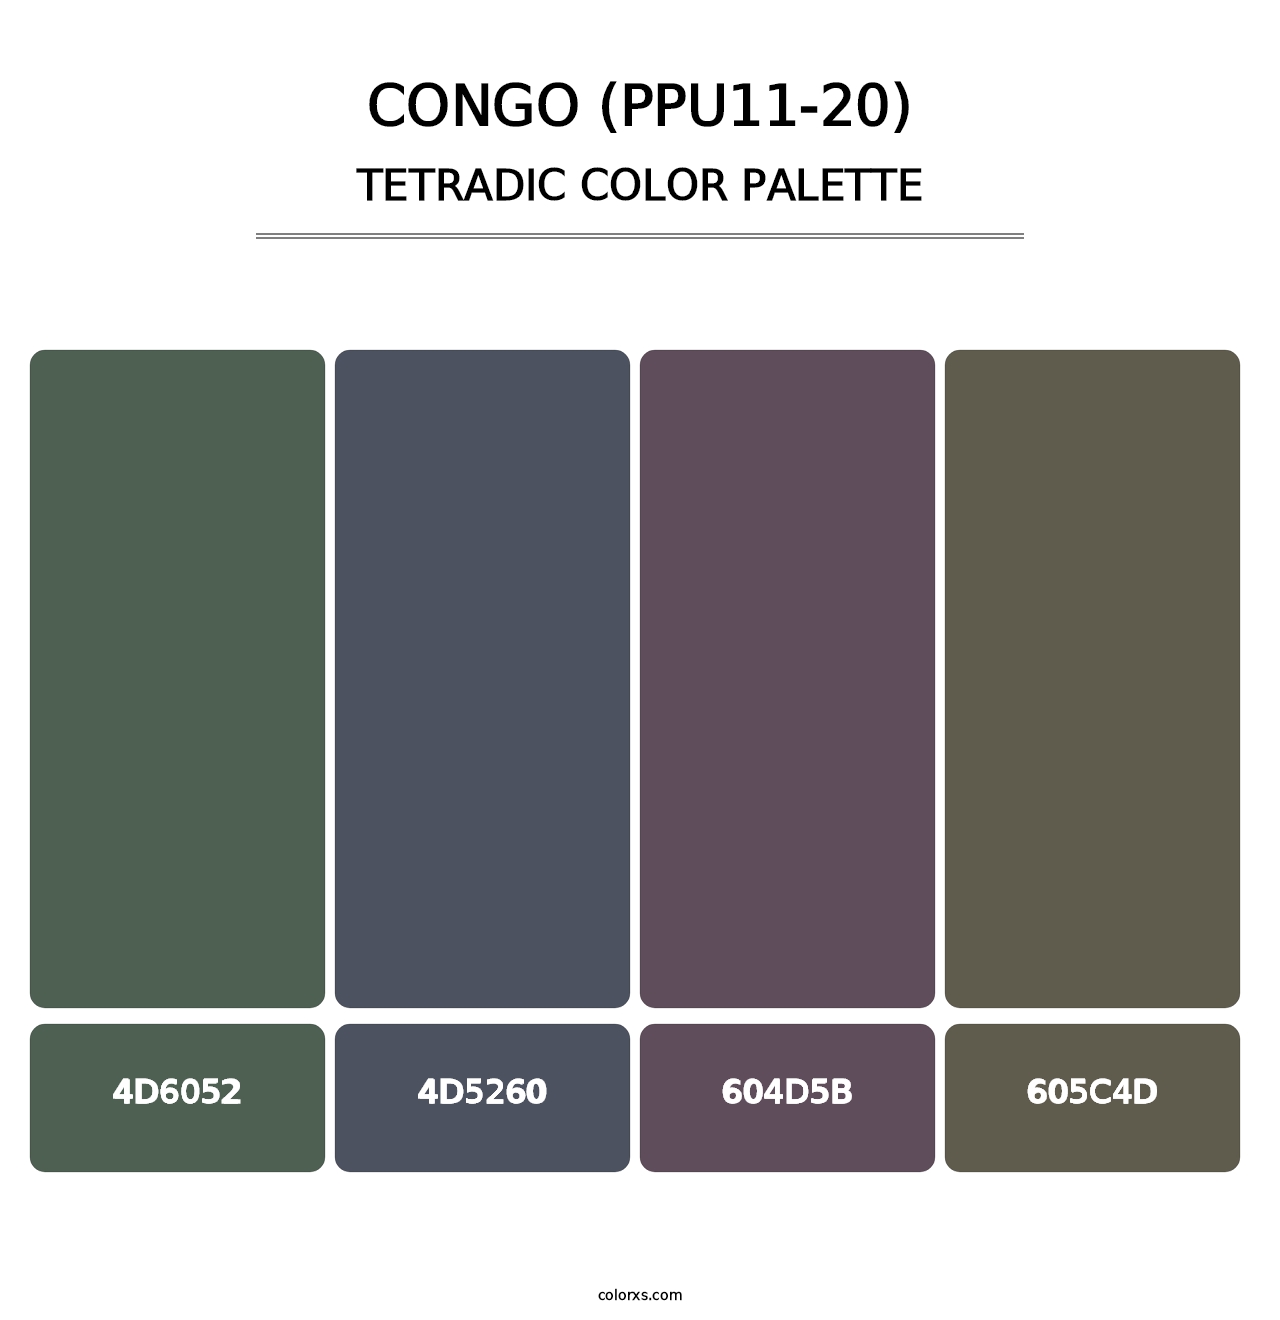 Congo (PPU11-20) - Tetradic Color Palette